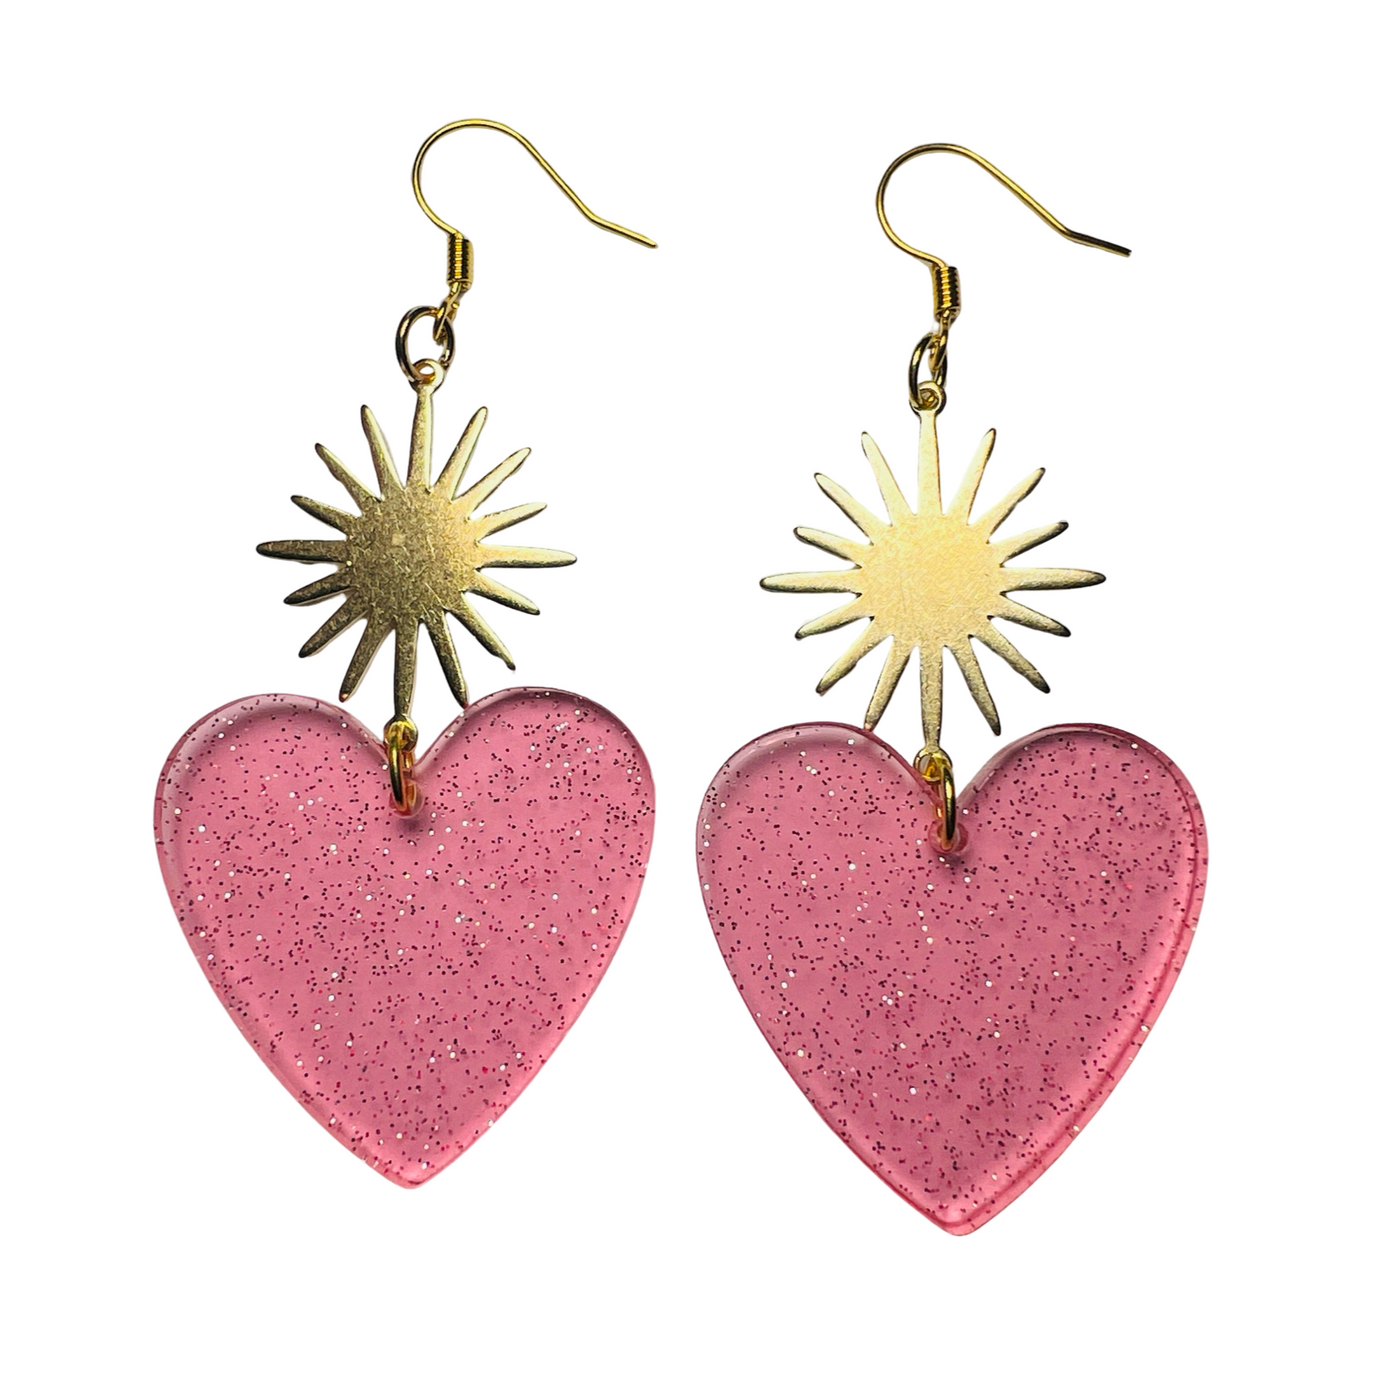 set of pink glitter resin heart earrings with a brass sunburst